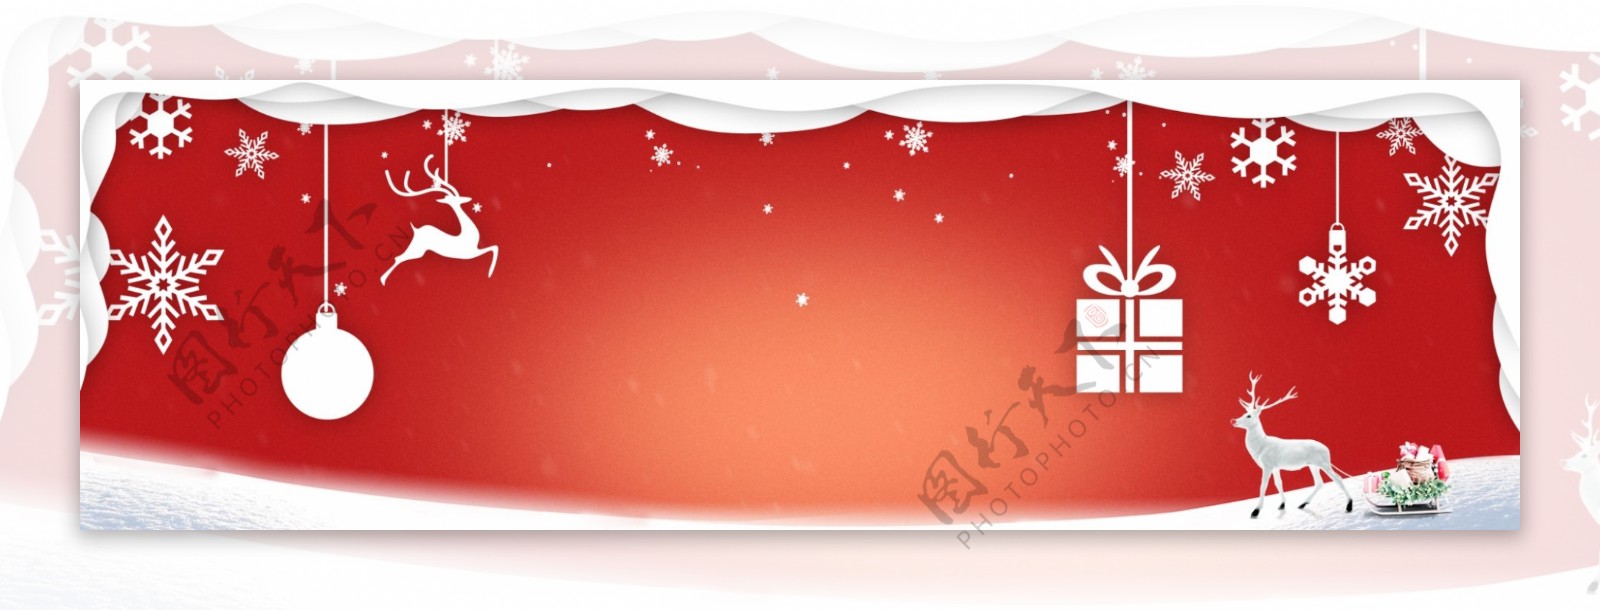 红色圣诞老人圣诞树卡通banner背景